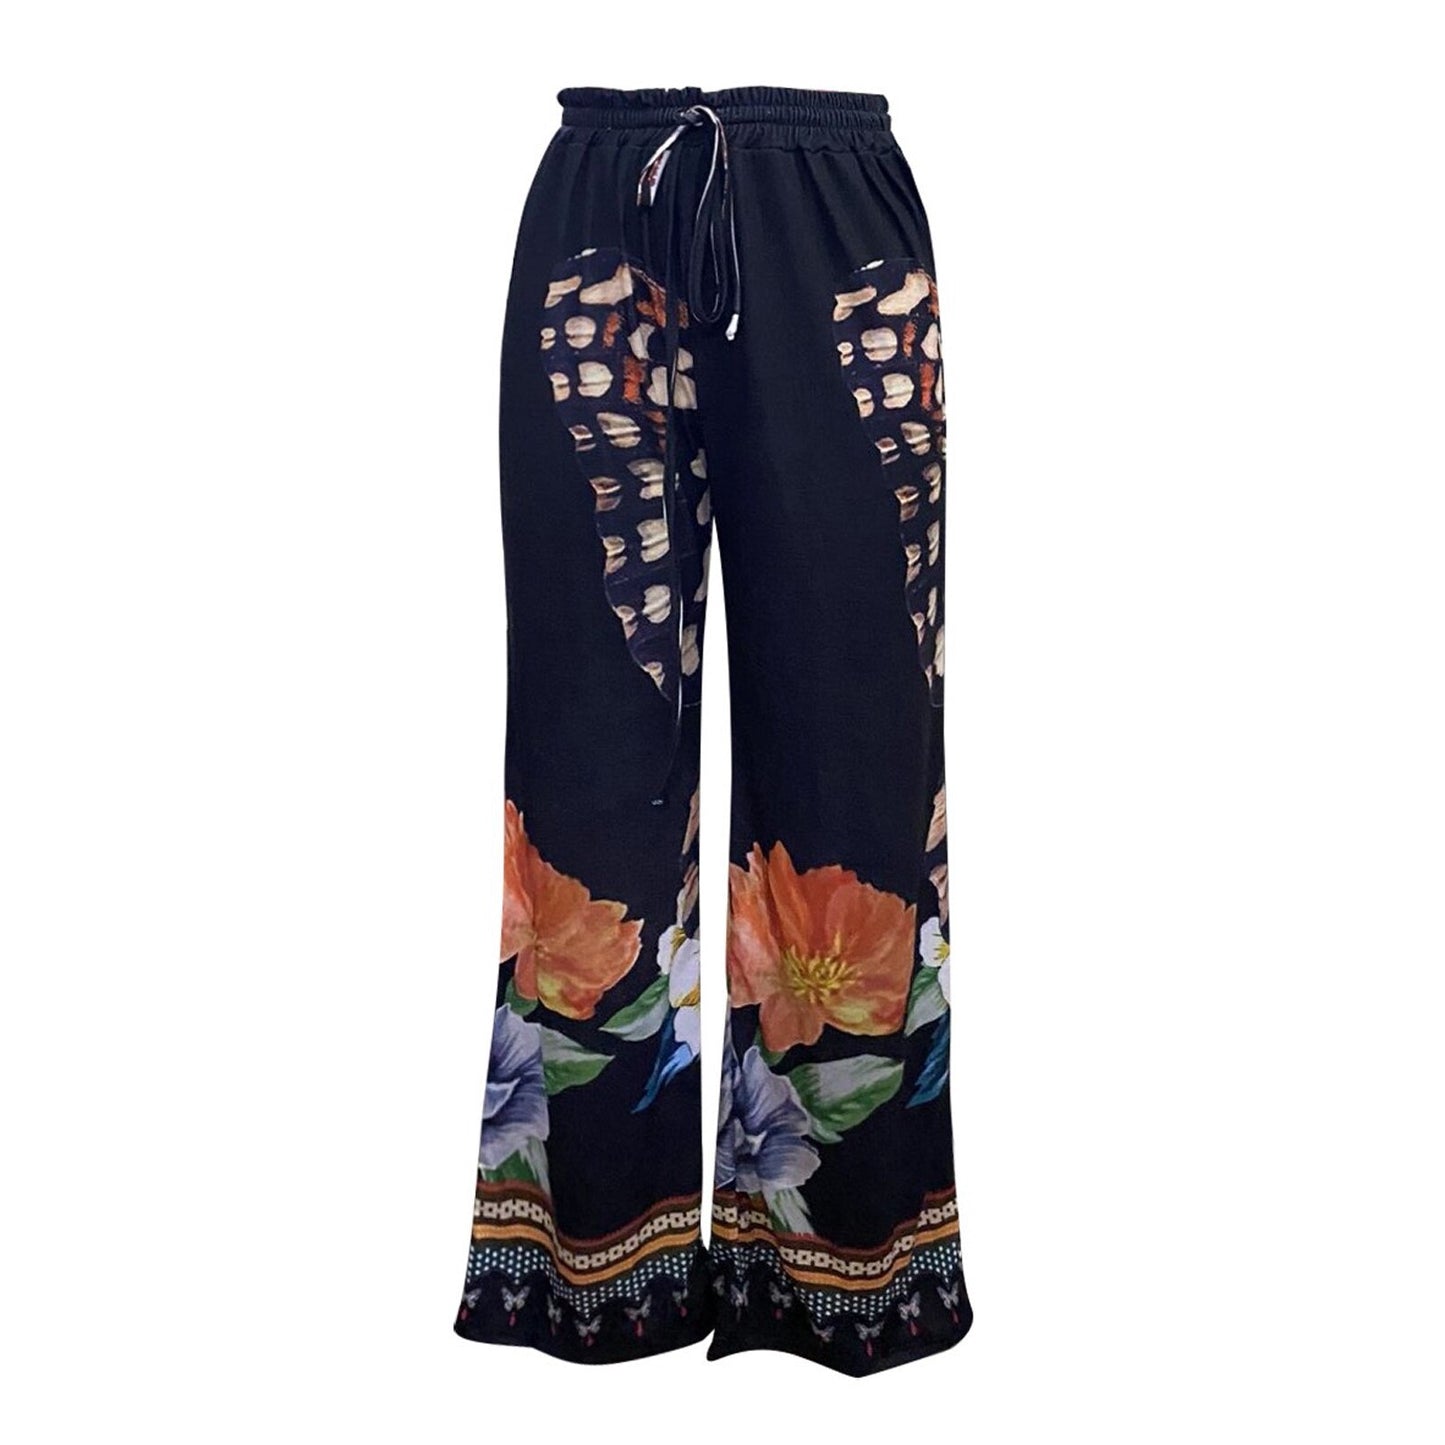 Pants Capris For Women High Waist Vintage Floral Printing Trousers Easy Loose Wide-leg Pants Bohemian National Moppingpants T7